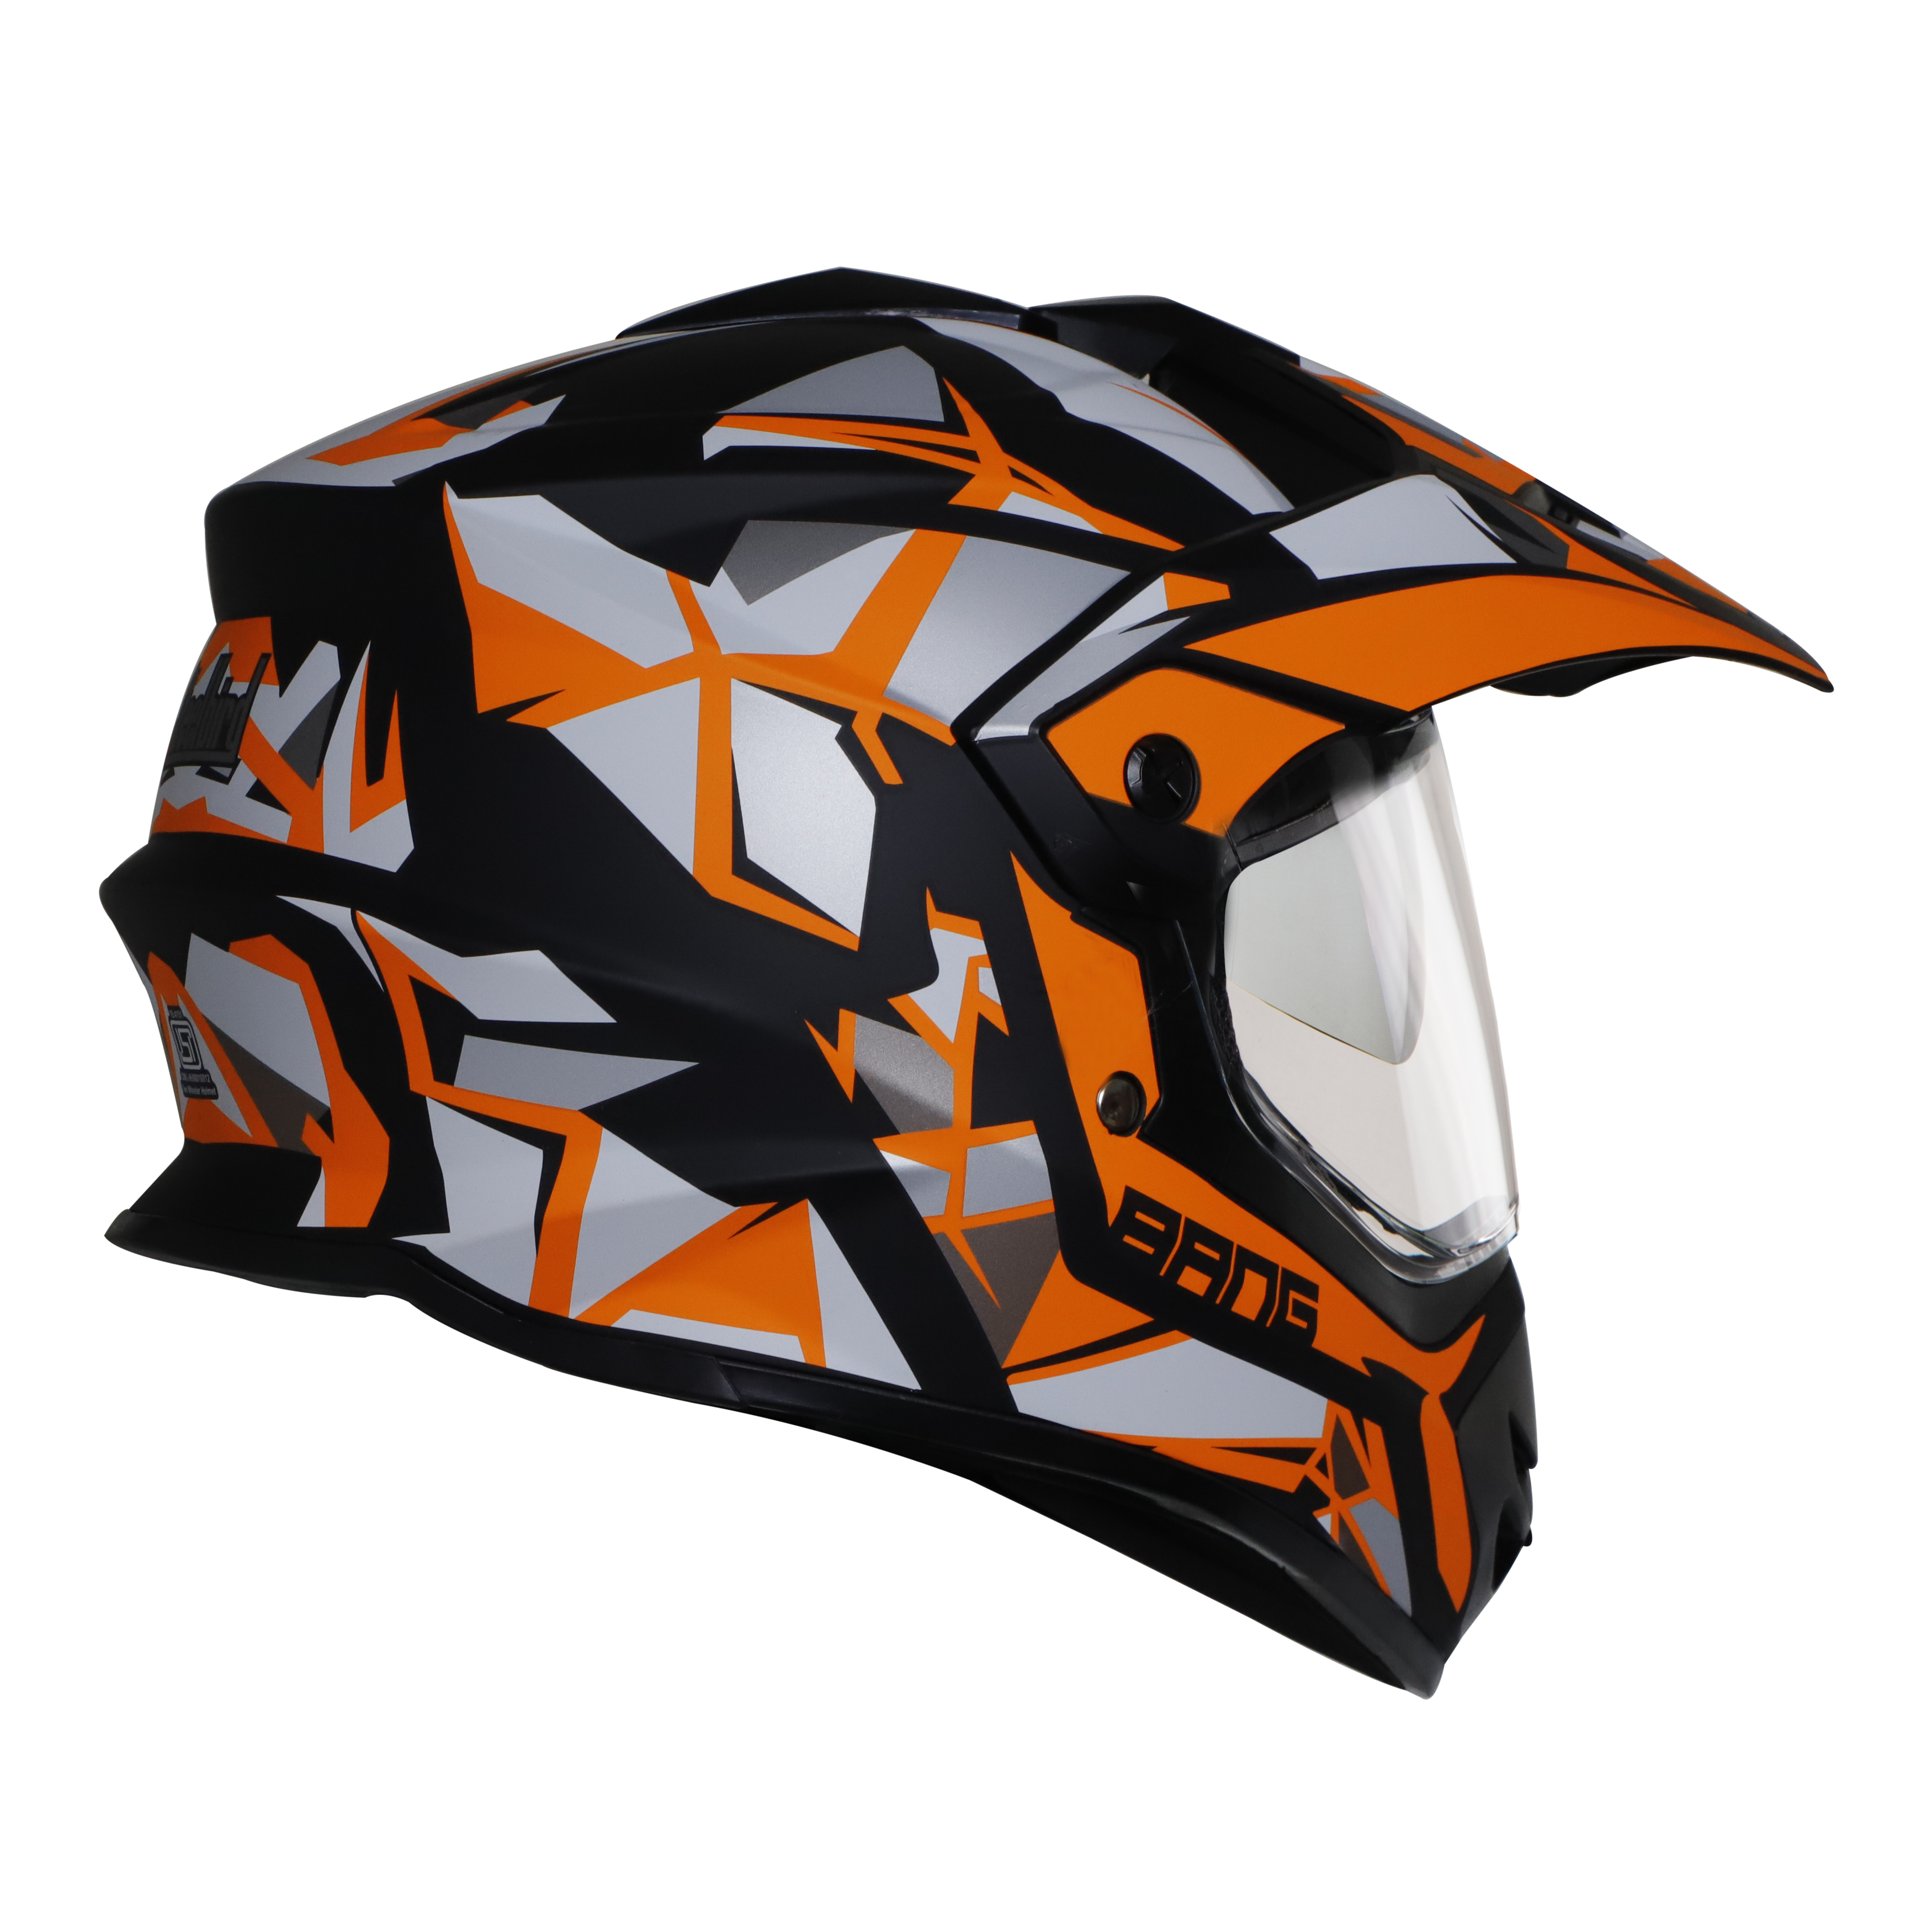 Steelbird Off Road Bang KTN ISI Certified ABS Material Shell Motocross Helmet With Inner Chrome Silver Sun Shield (Matt Black Orange)